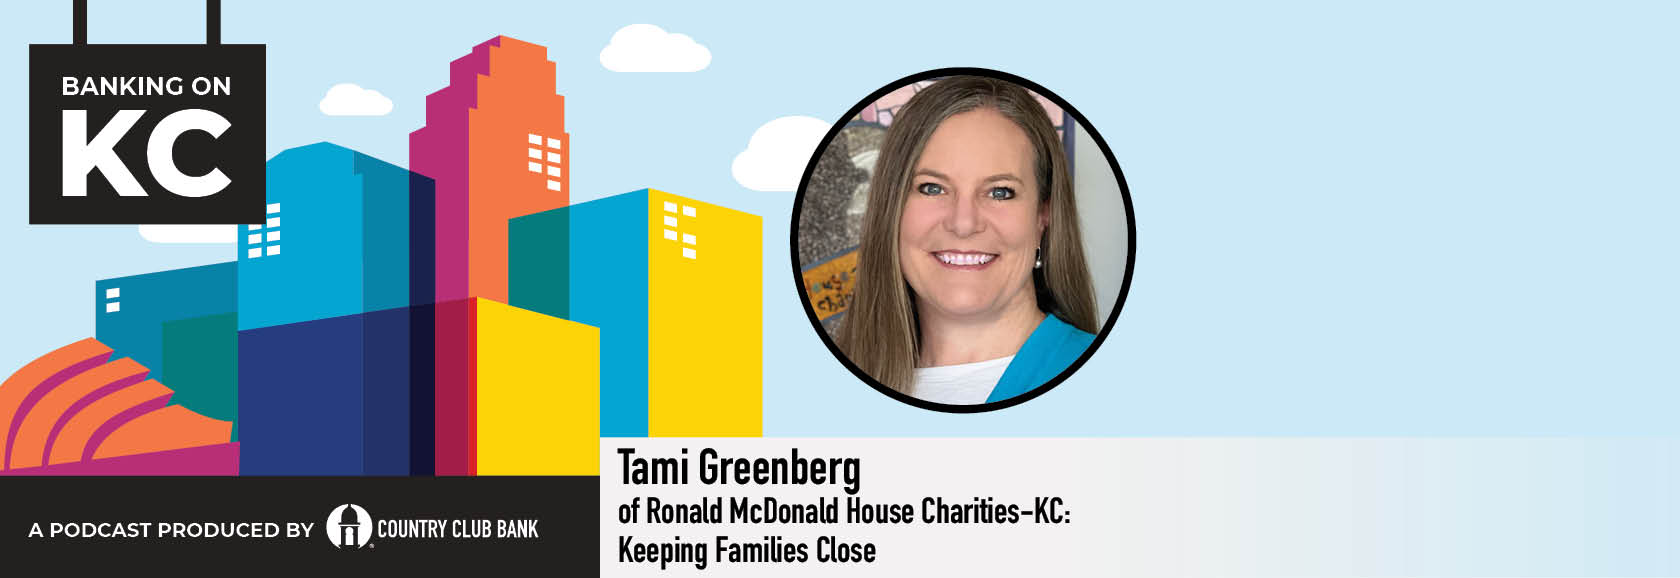 Banking on KC – Tami Greenberg of Ronald McDonald House